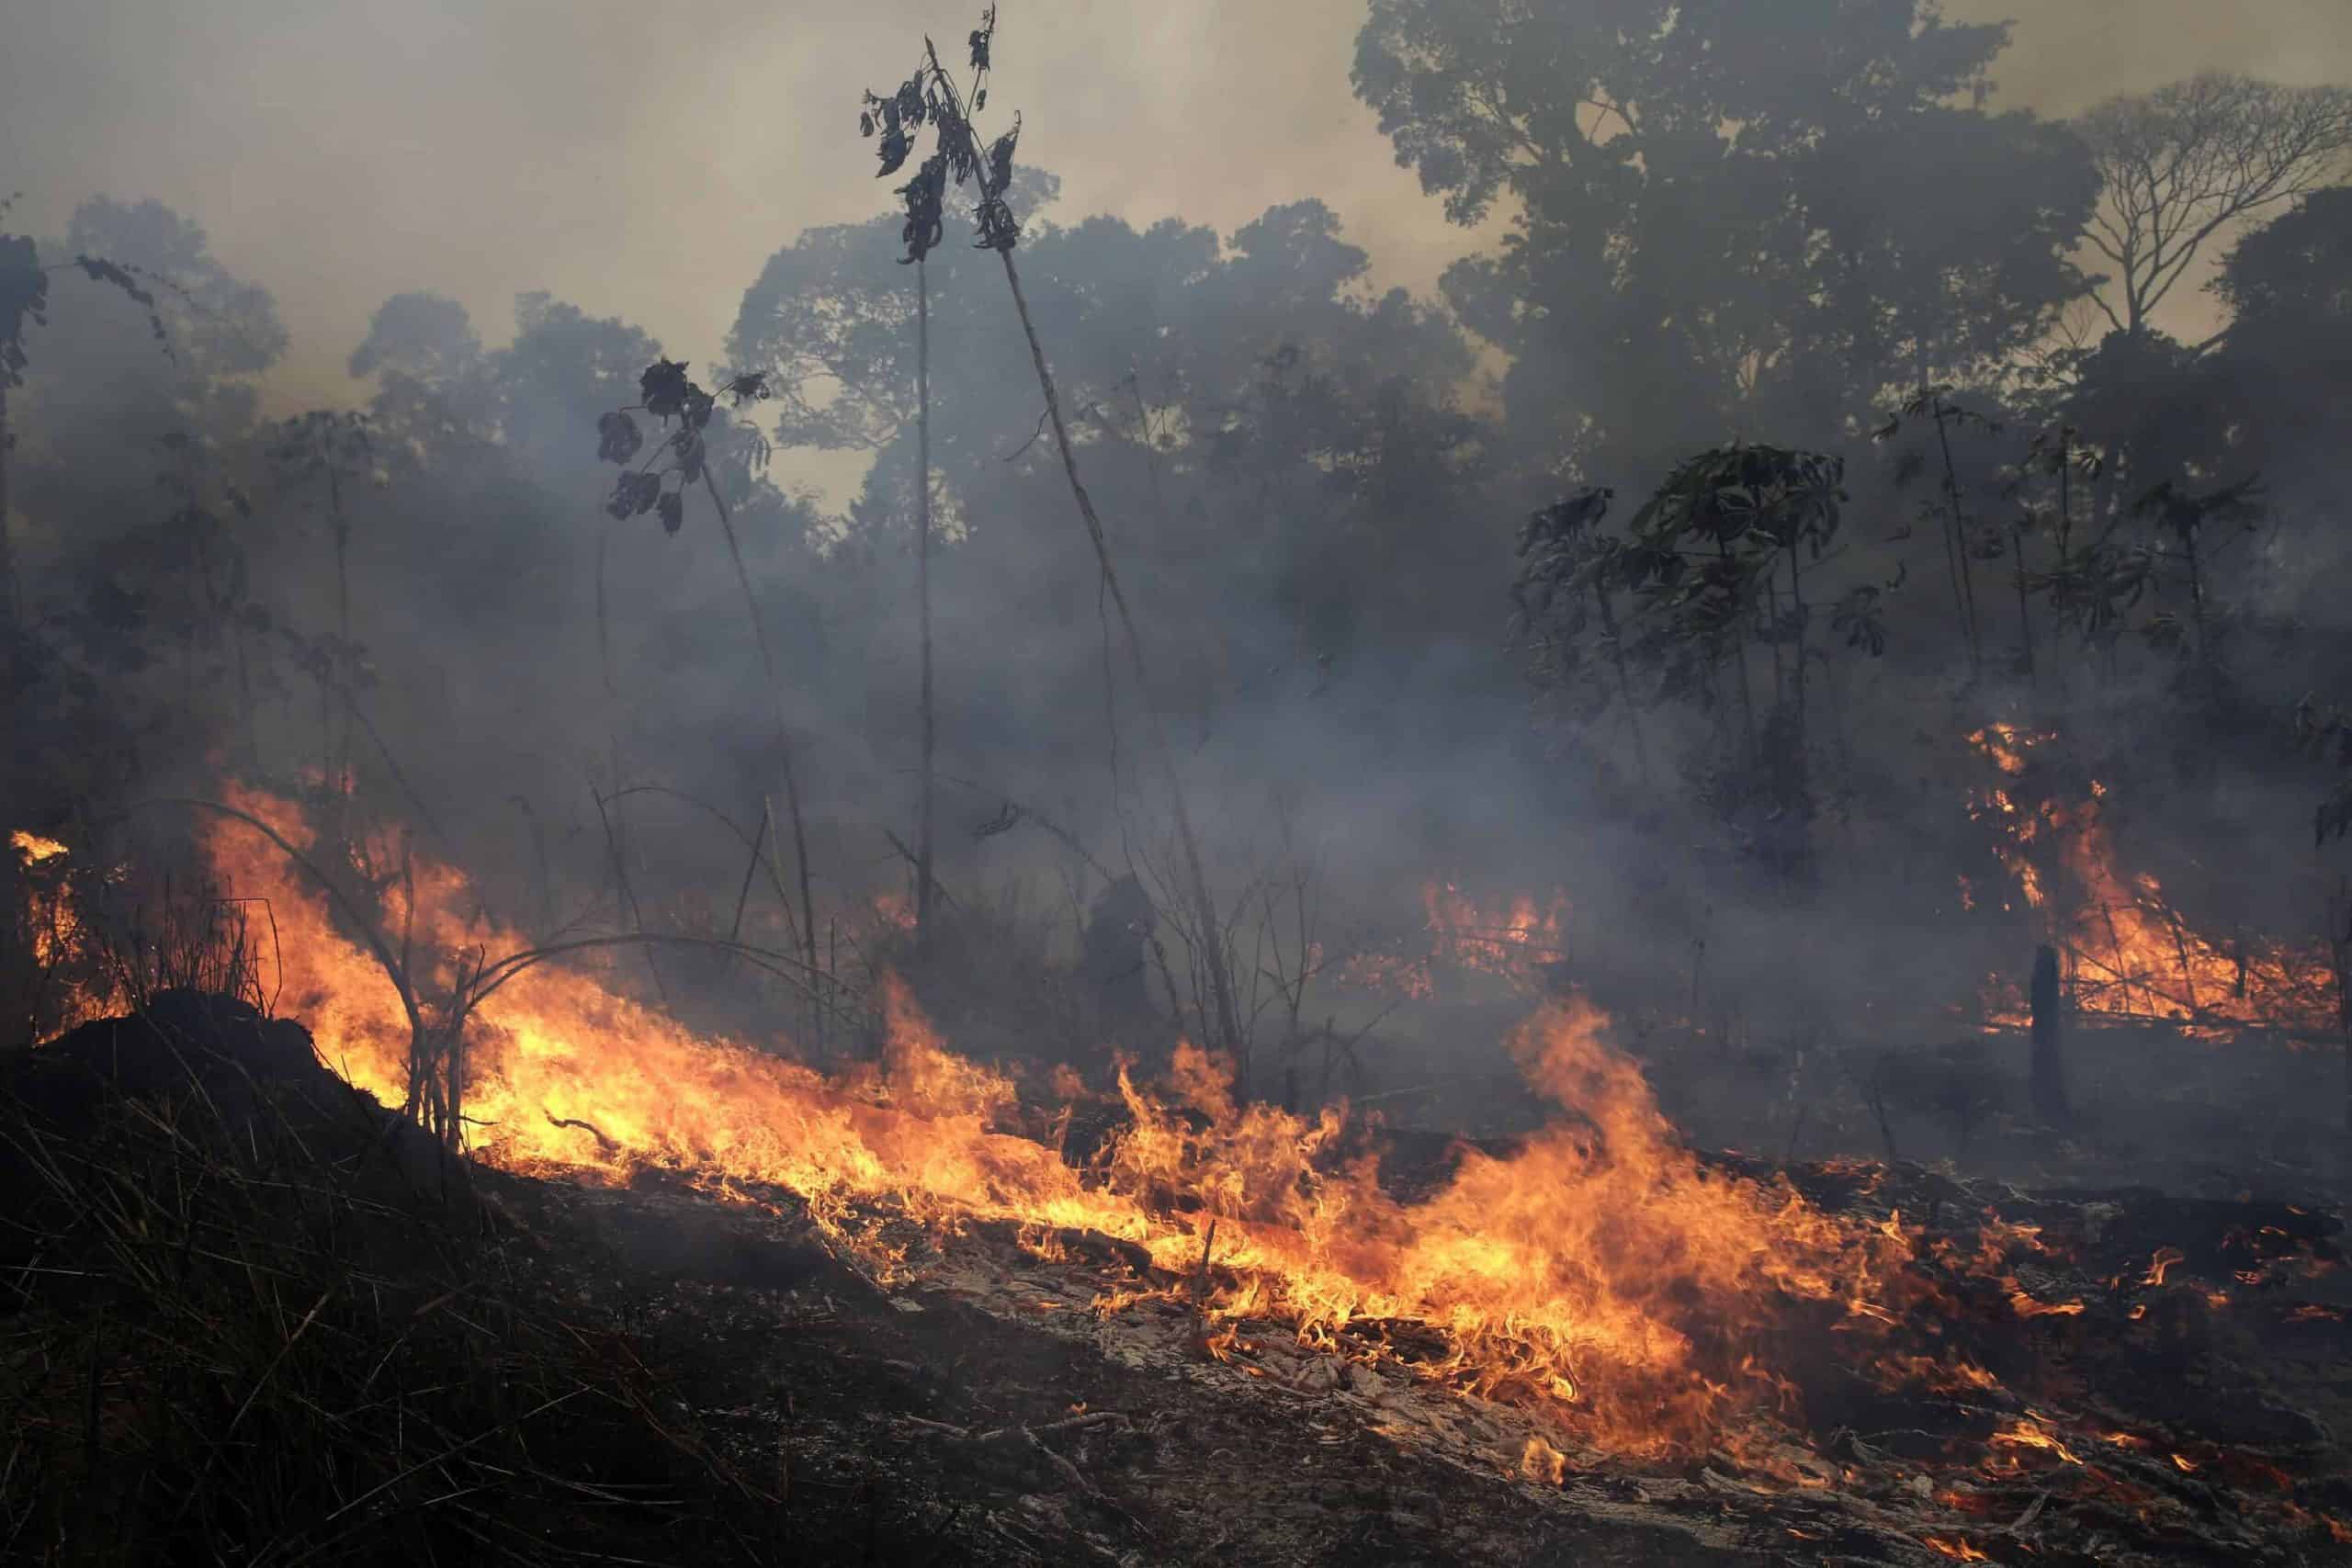 Brazilian President Bolsonaro demands Macron apology before he will accept aid for Amazon fires